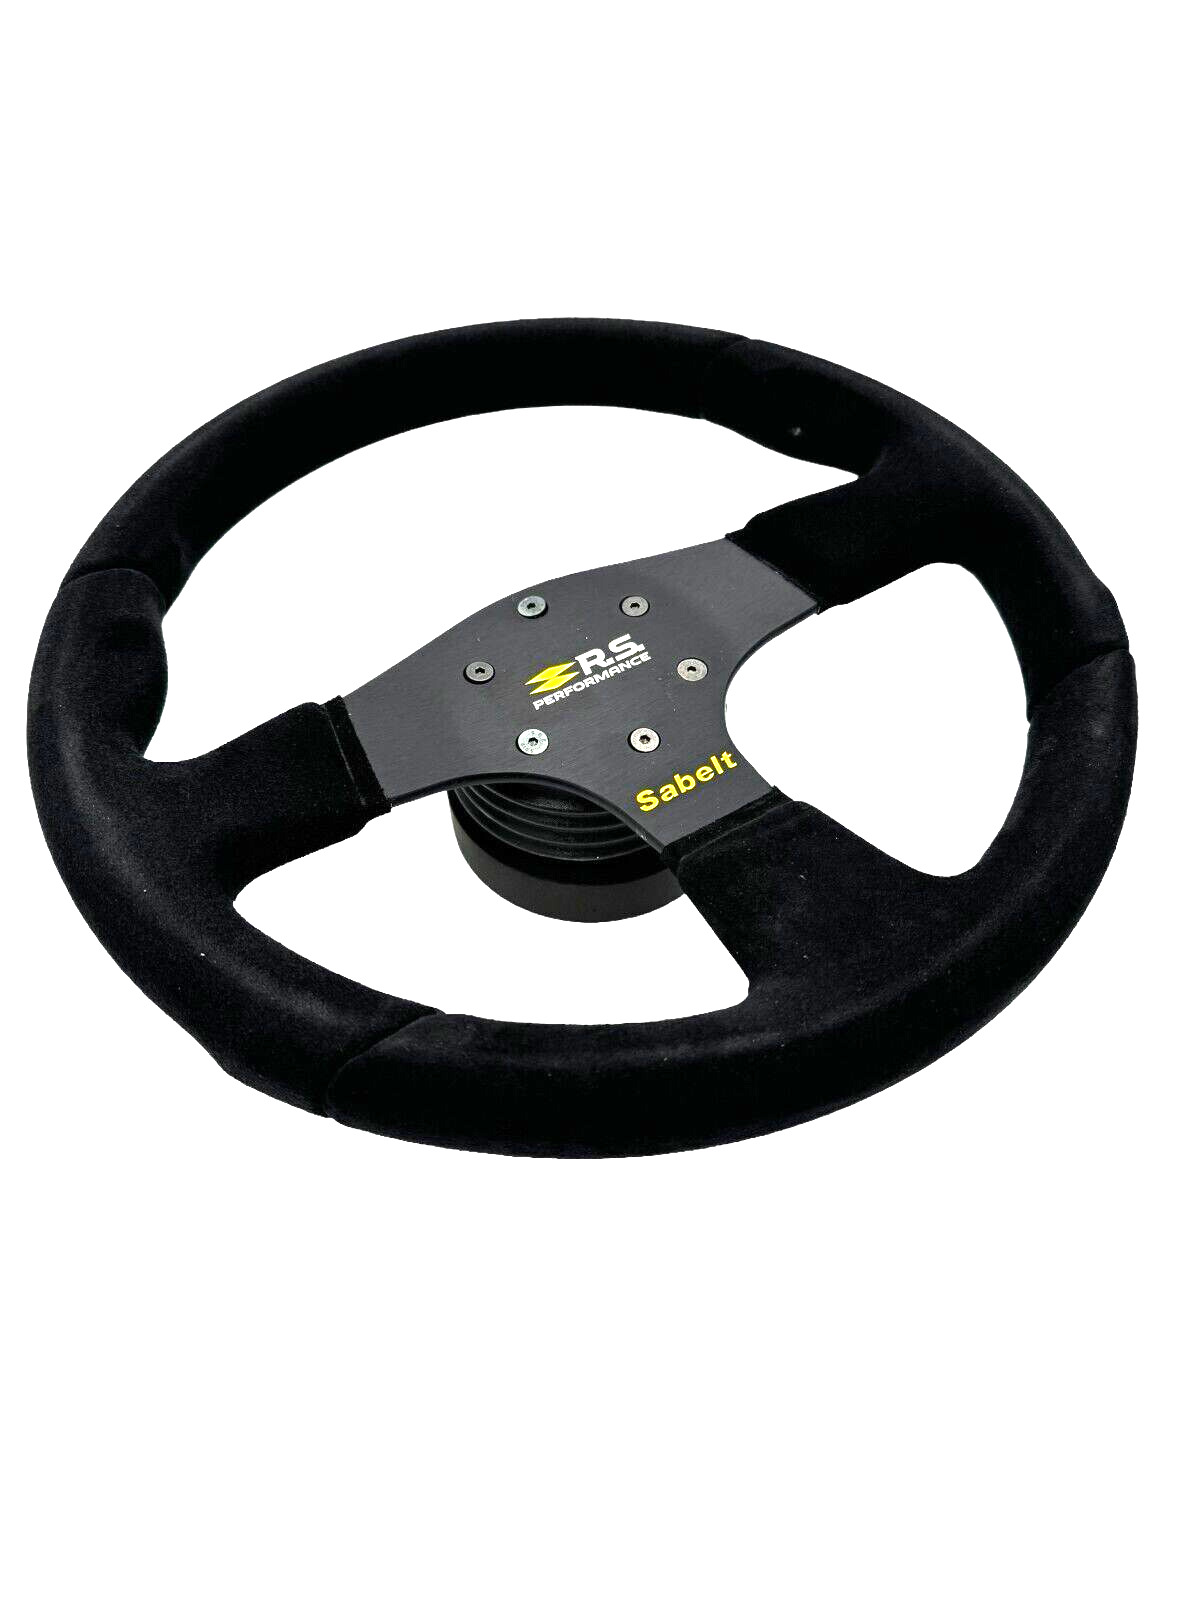 Renault Clio RS Sabelt RS Performance Racing Steering Wheel 330mm Alcantara